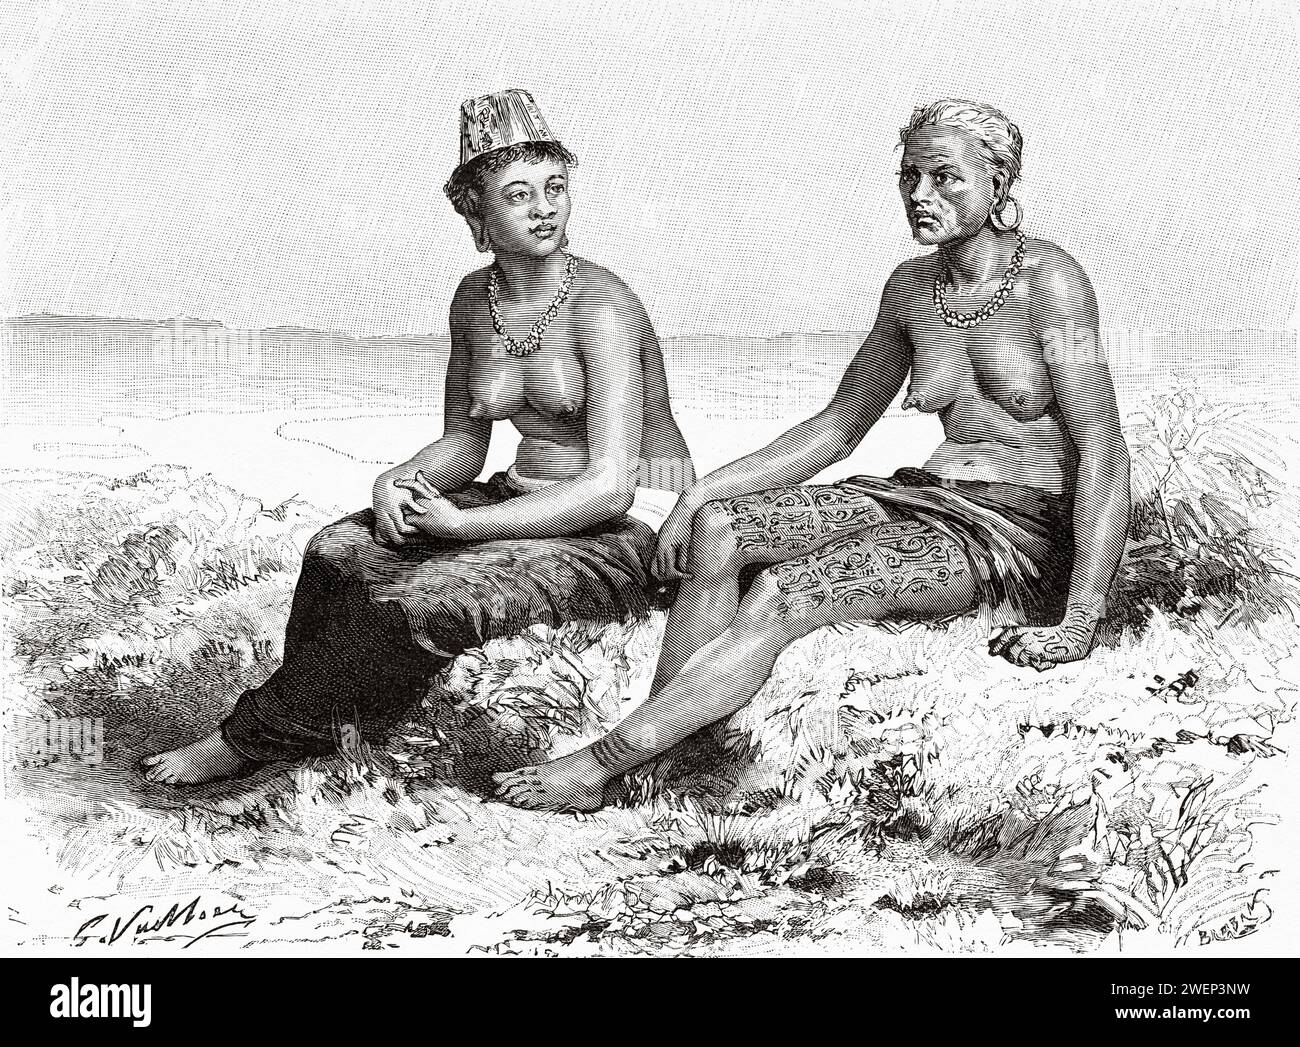 Dyak girl and woman form Long Wai. Kalimantan. Borneo Island, Indonesia. From Koutei to Banjarmasin, a journey through Borneo by Carl Bock (1849 - 1932) Stock Photo